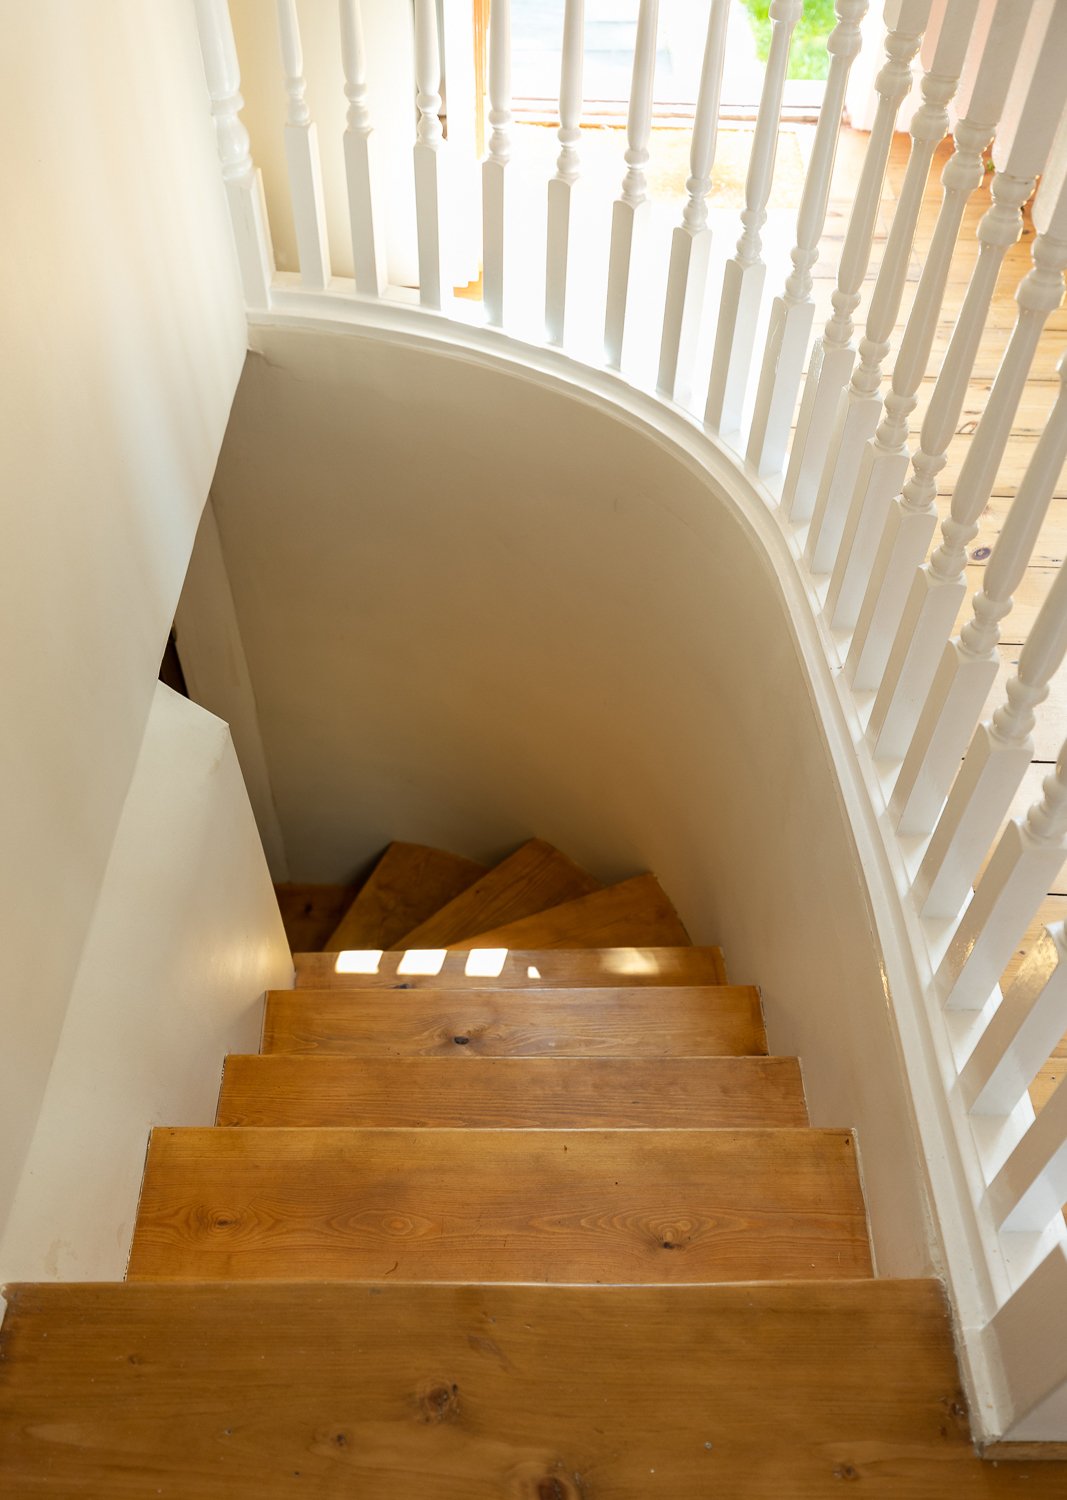 CharlotteBucciero-interiors-Spiral-staircase-oak-flooring-stairs-cream-basement.jpg